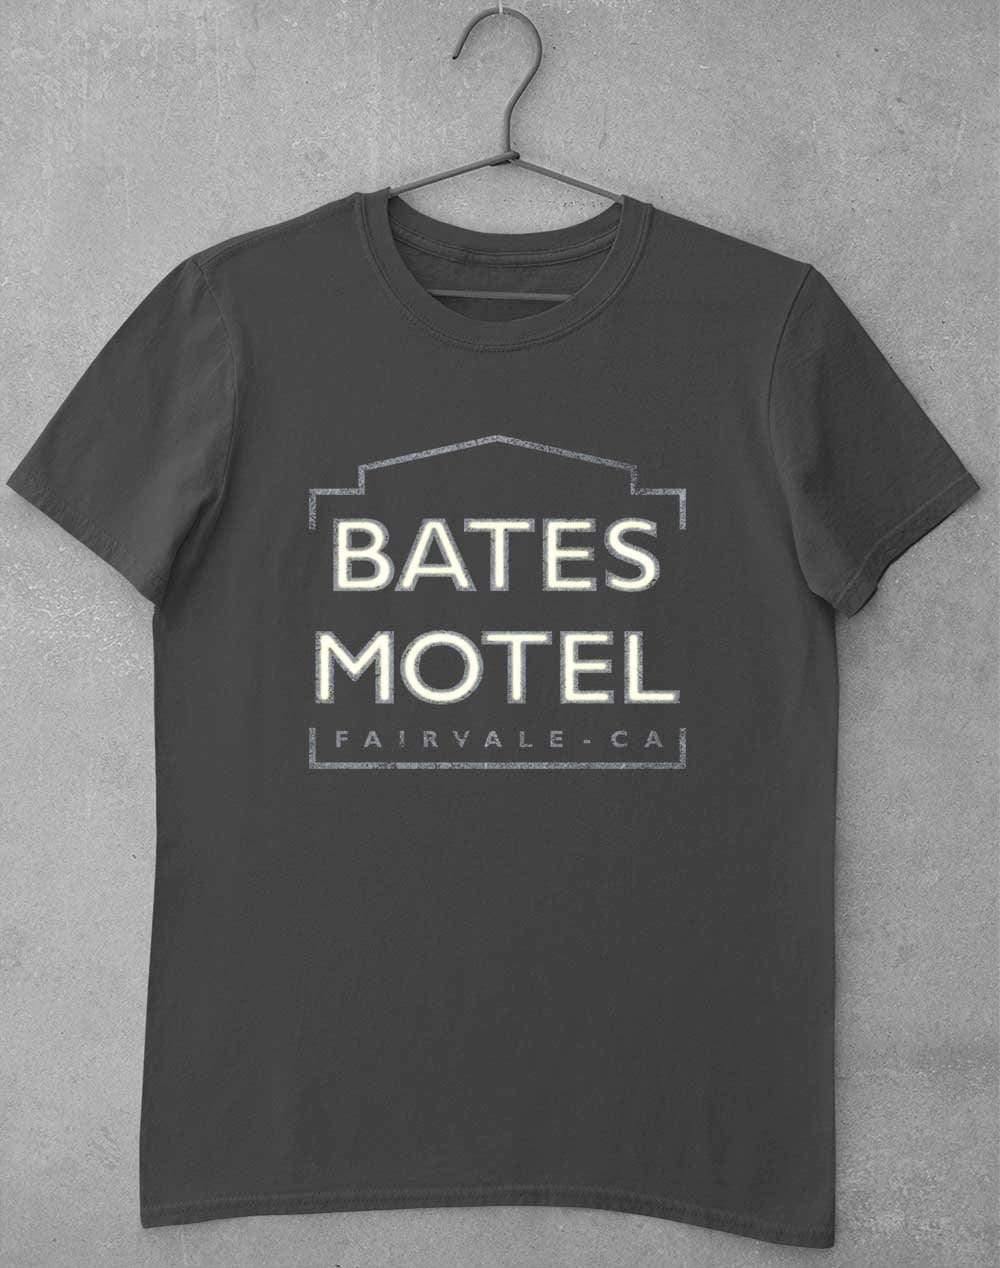 Bates Motel Sign T-Shirt S / Charcoal  - Off World Tees